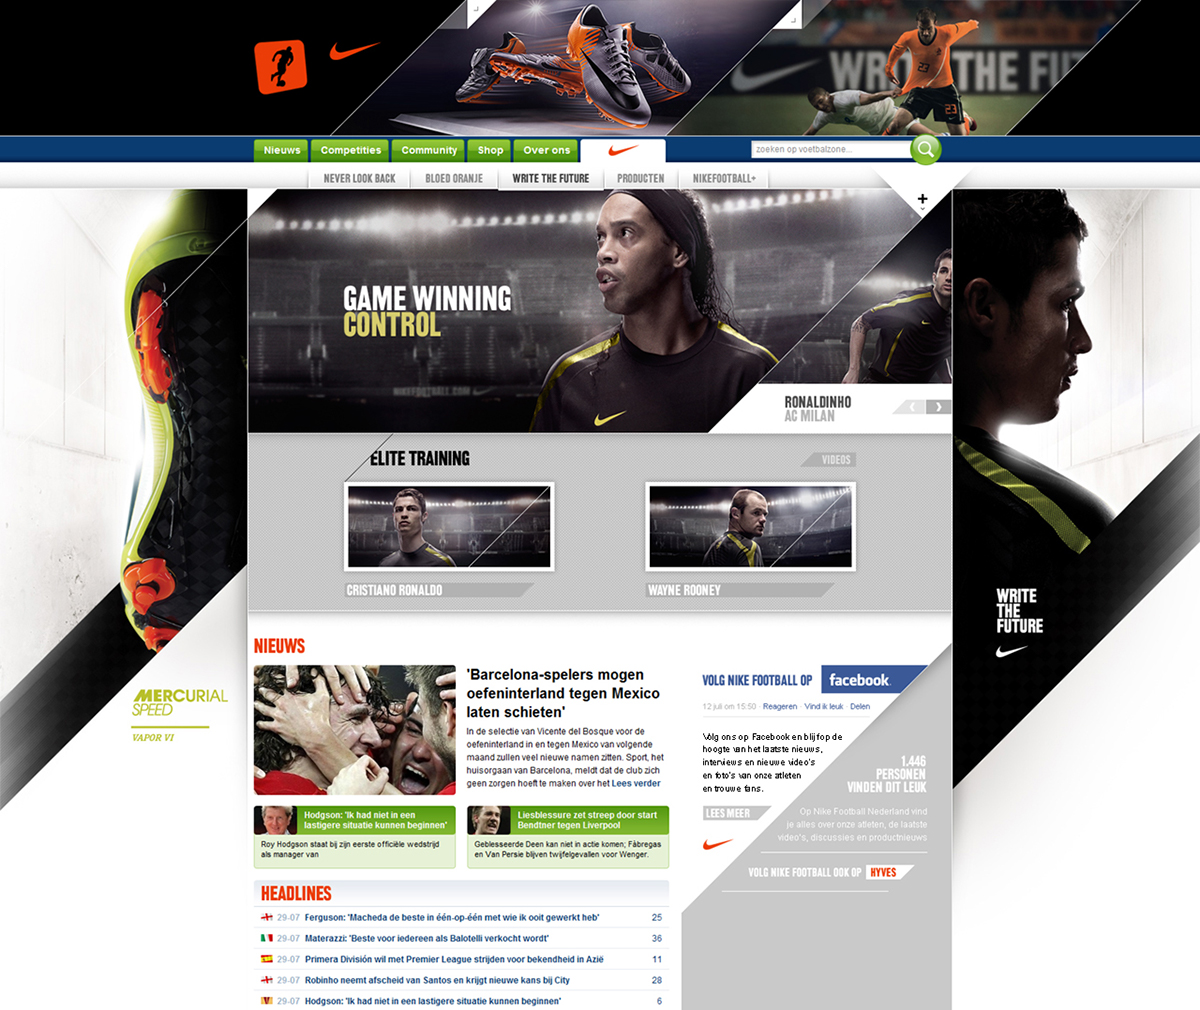 Nike Voetbalzone Pro Combat Smart ad social media twitter Swoosh battle campaign interface design nike football Sneijder Van der Vaart inter milan